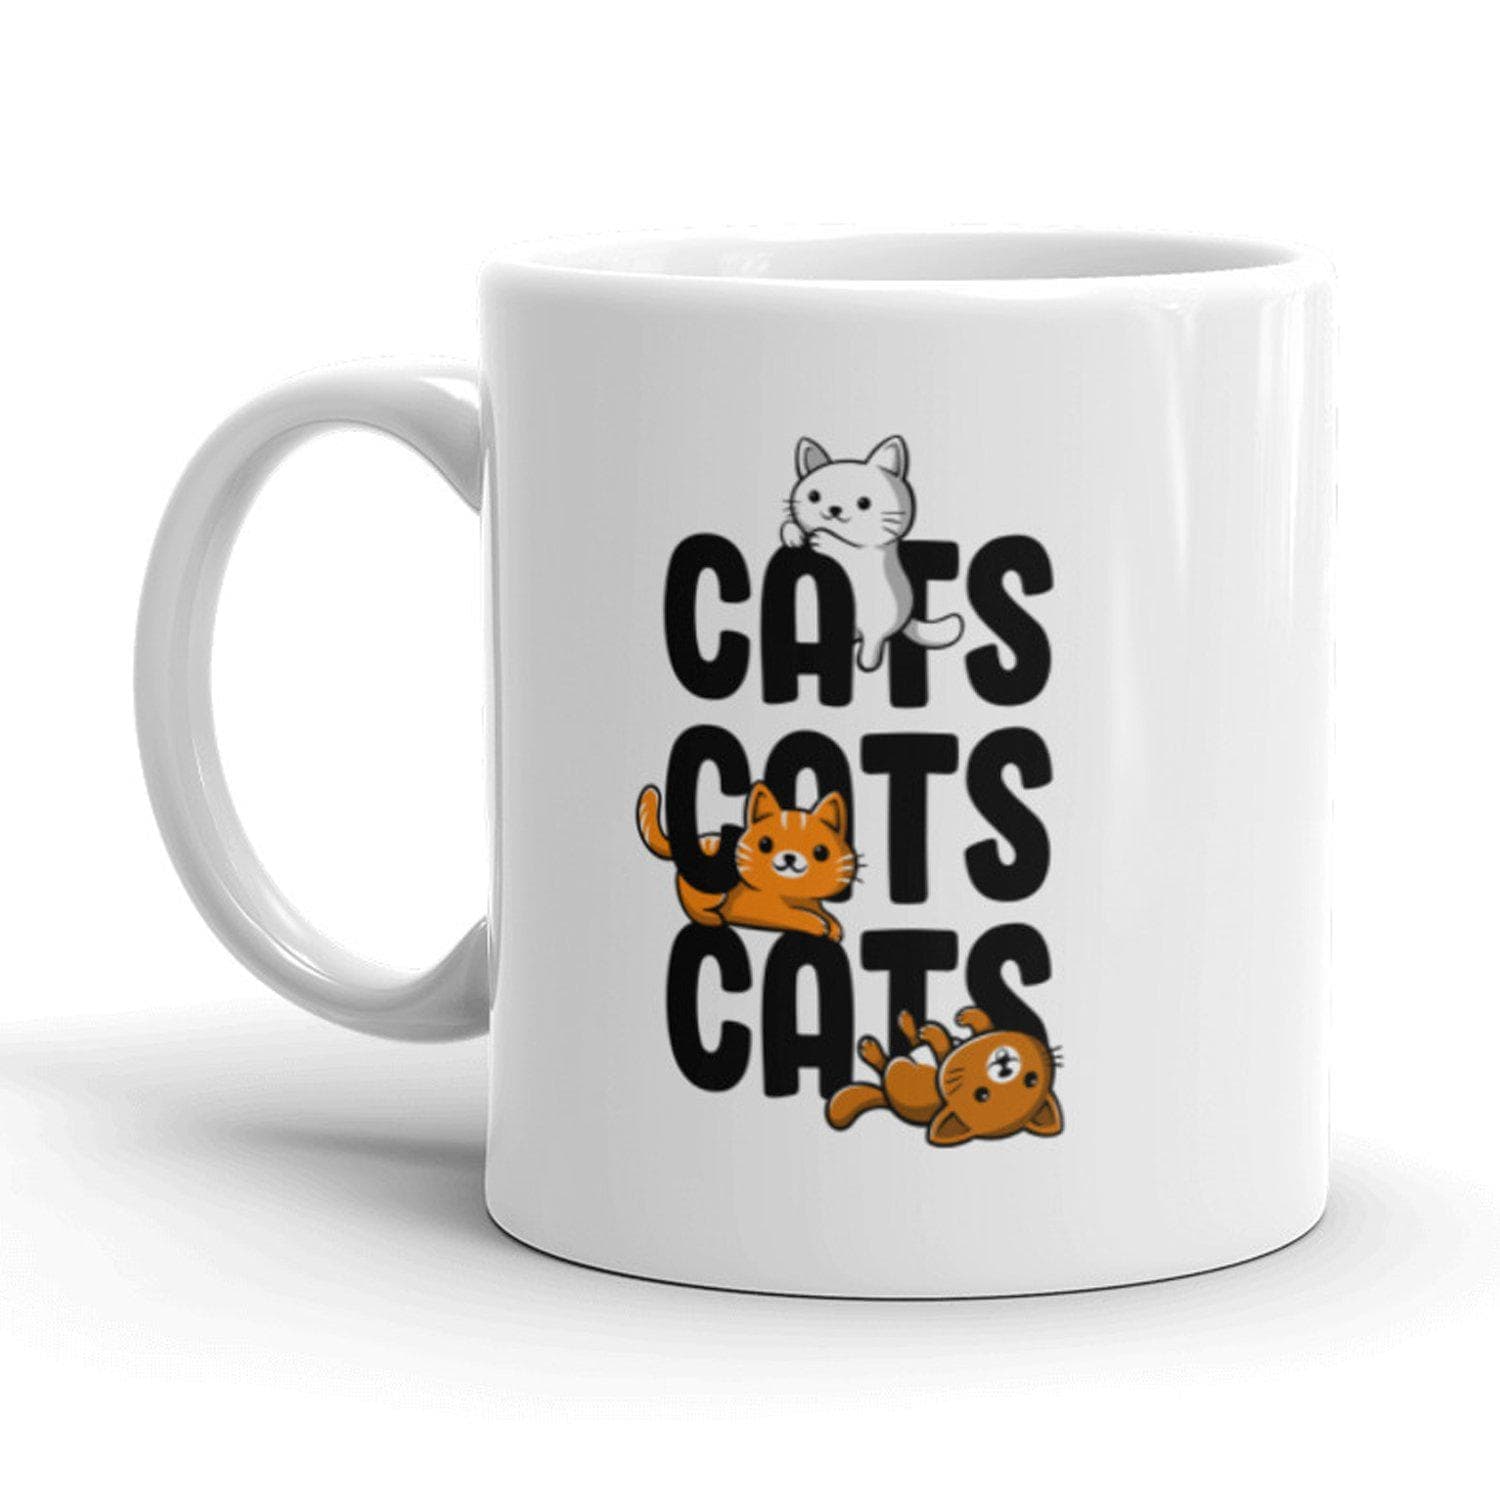 Cats Cats Cats Mug - Crazy Dog T-Shirts